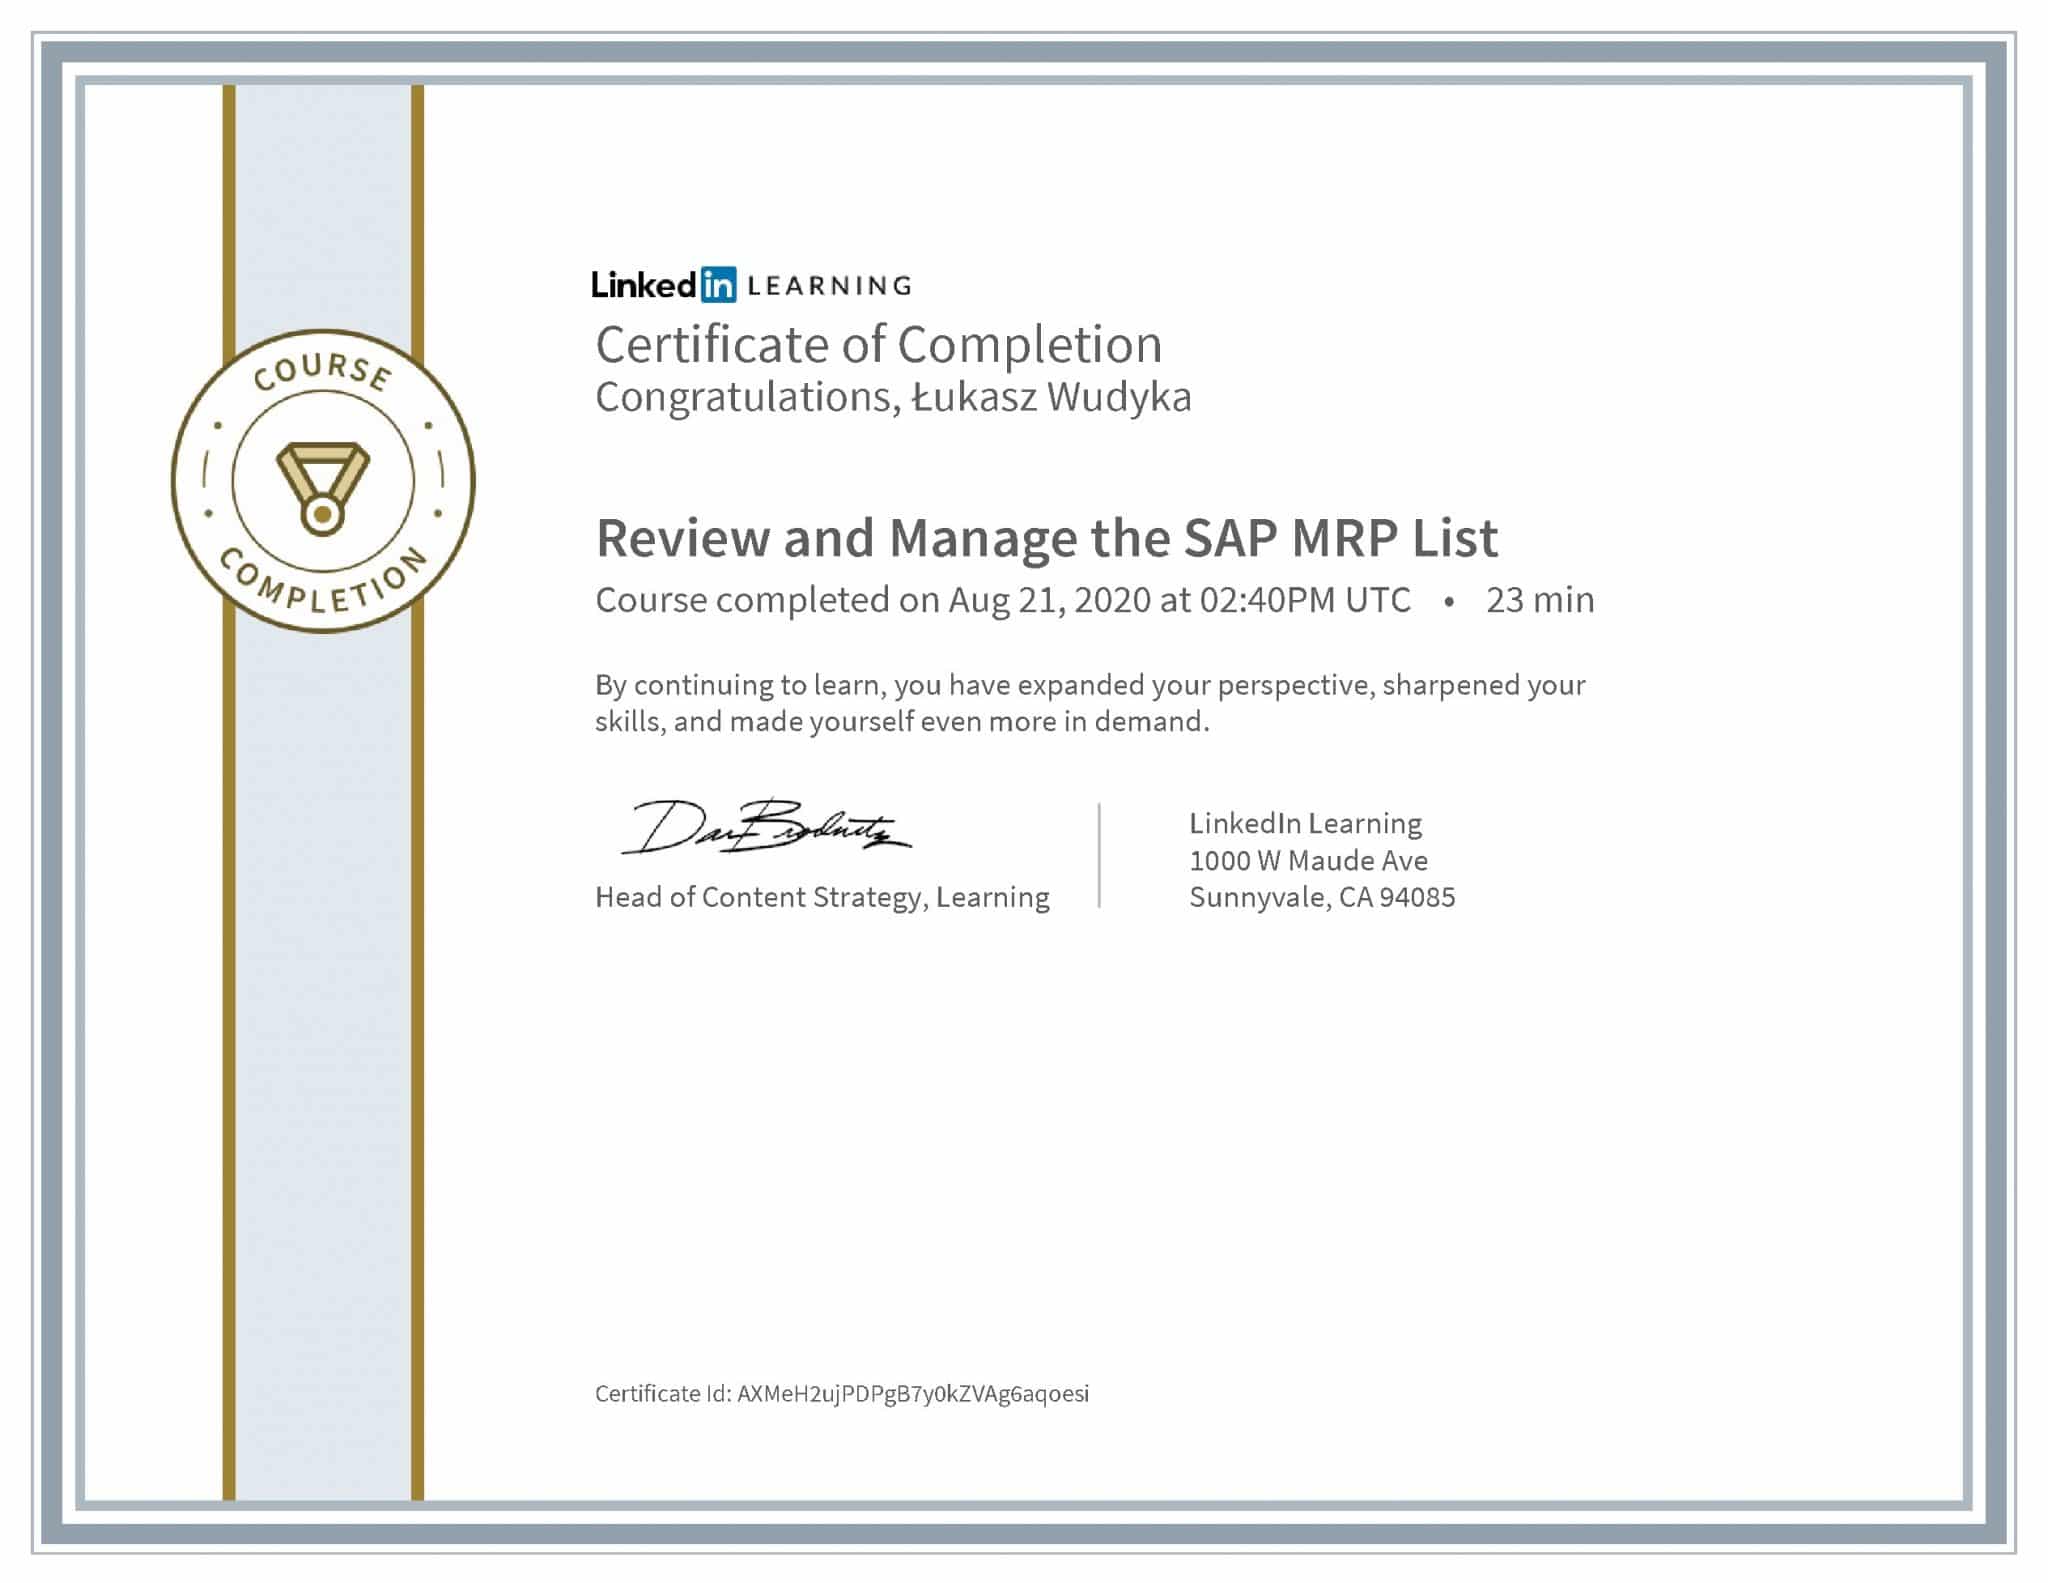 Łukasz Wudyka certyfikat LinkedIn Review and Manage the SAP MRP List